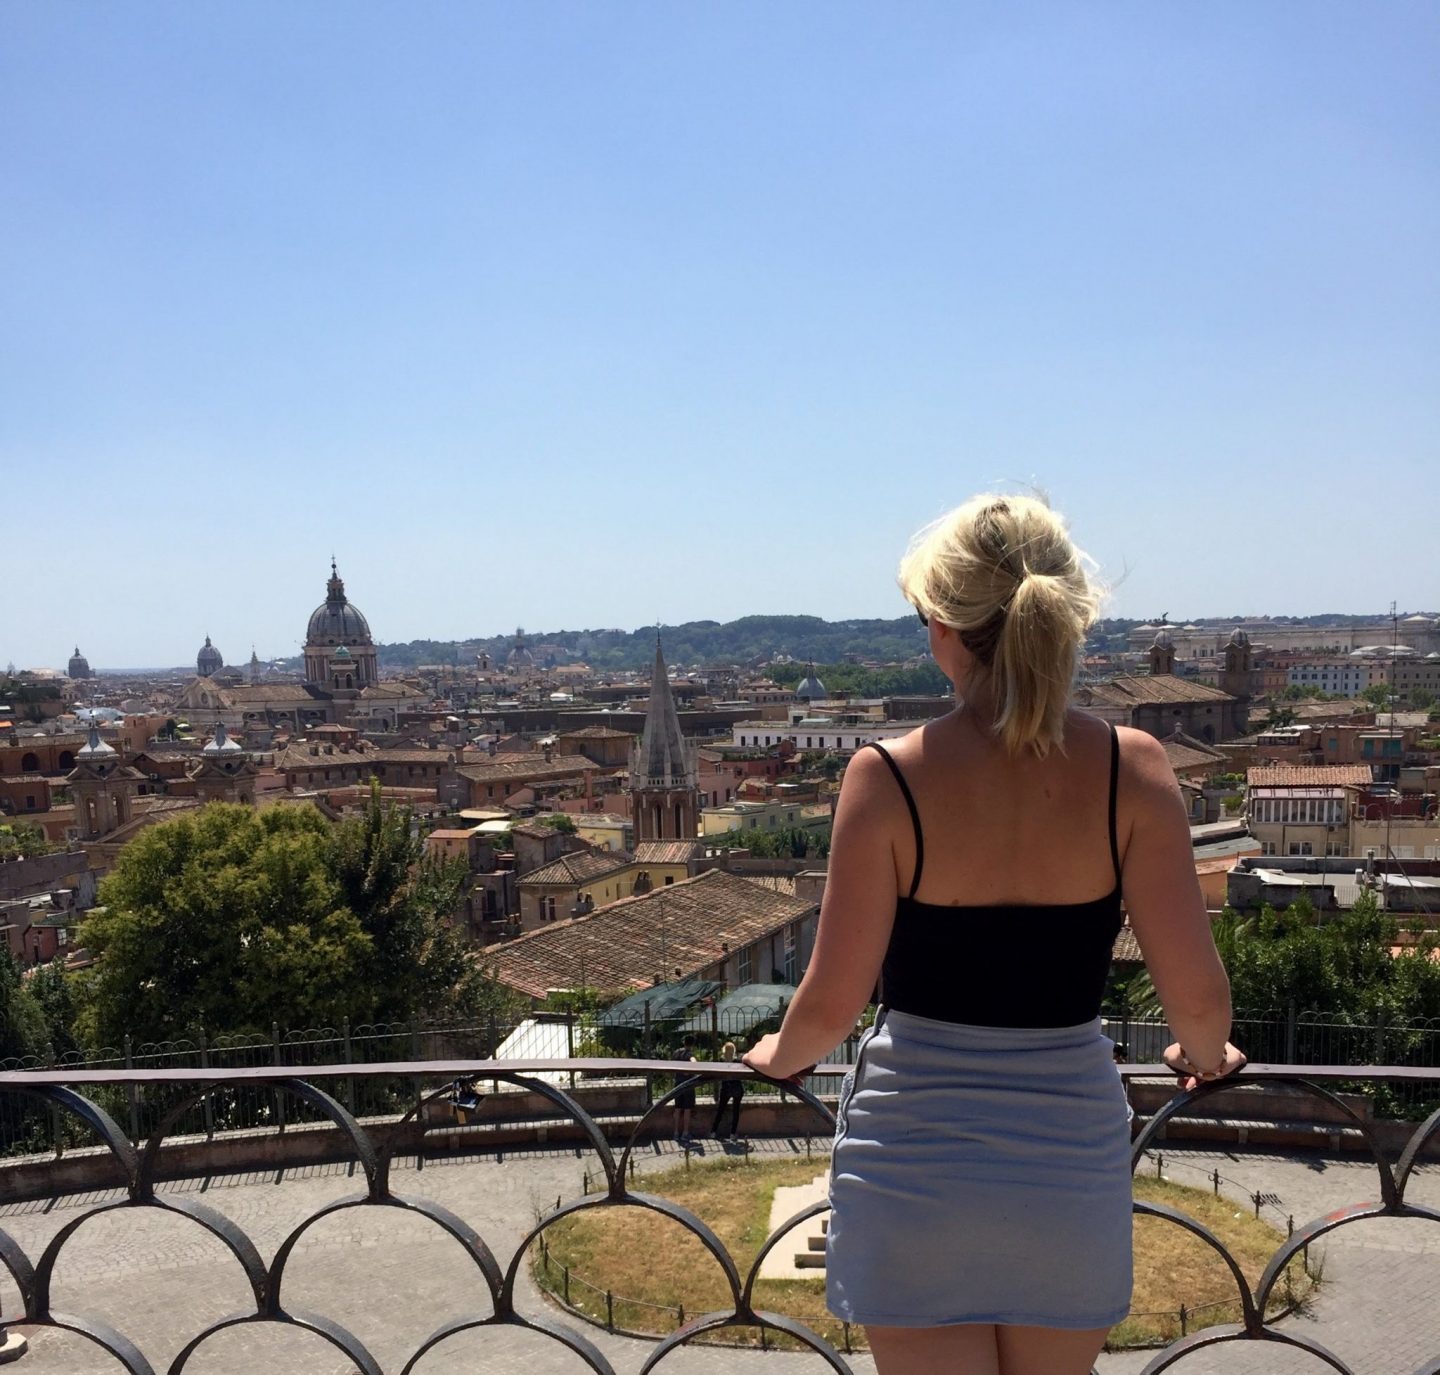 Laura enjoying the views across Rome, Italy